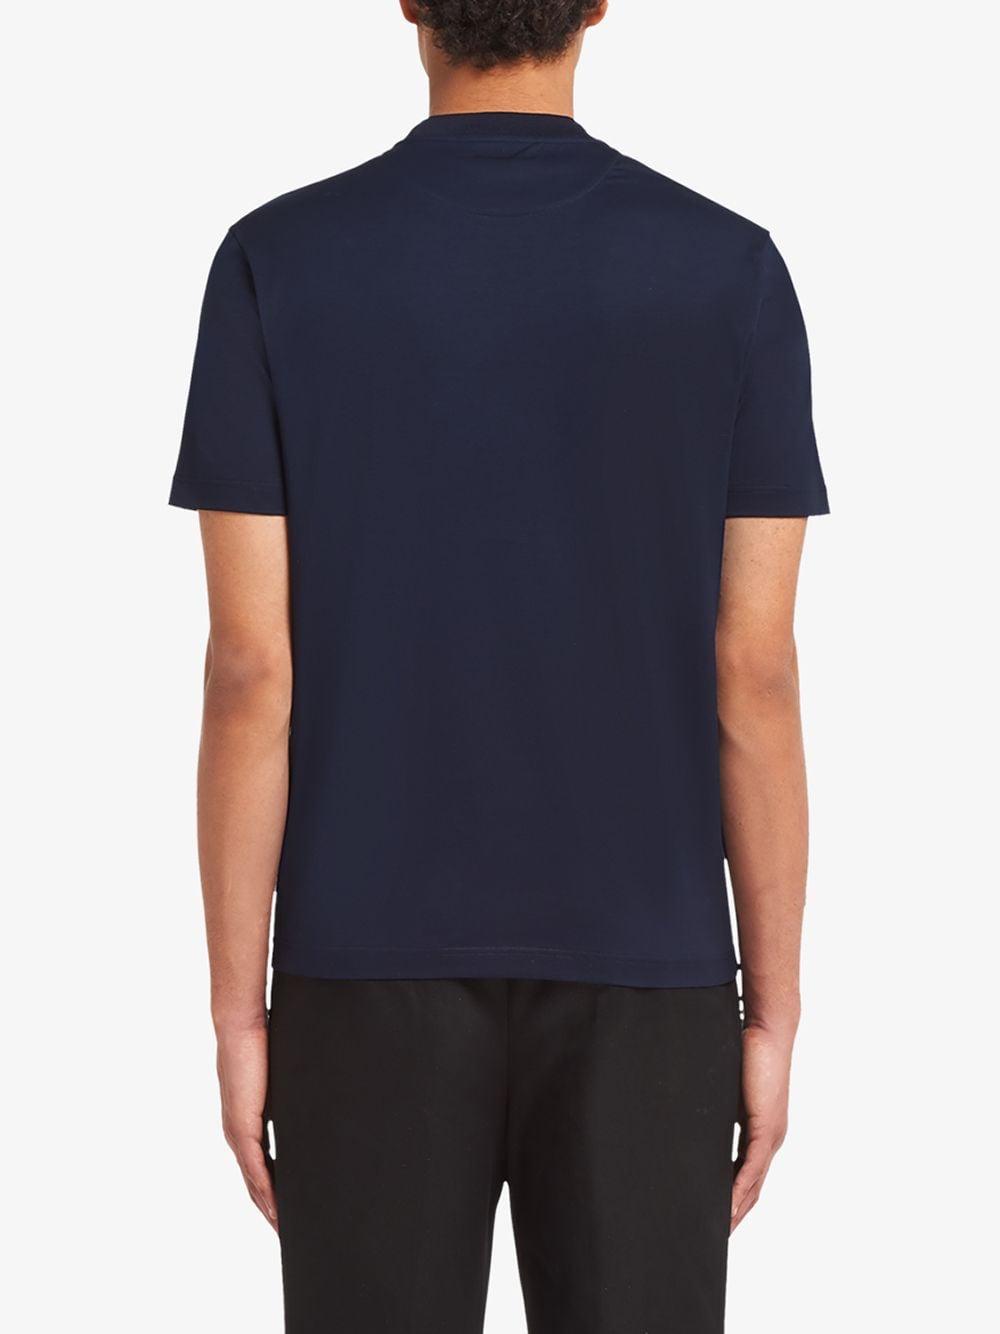 Prada Cotton Logo-print Crew-neck T-shirt in Blue for Men - Lyst